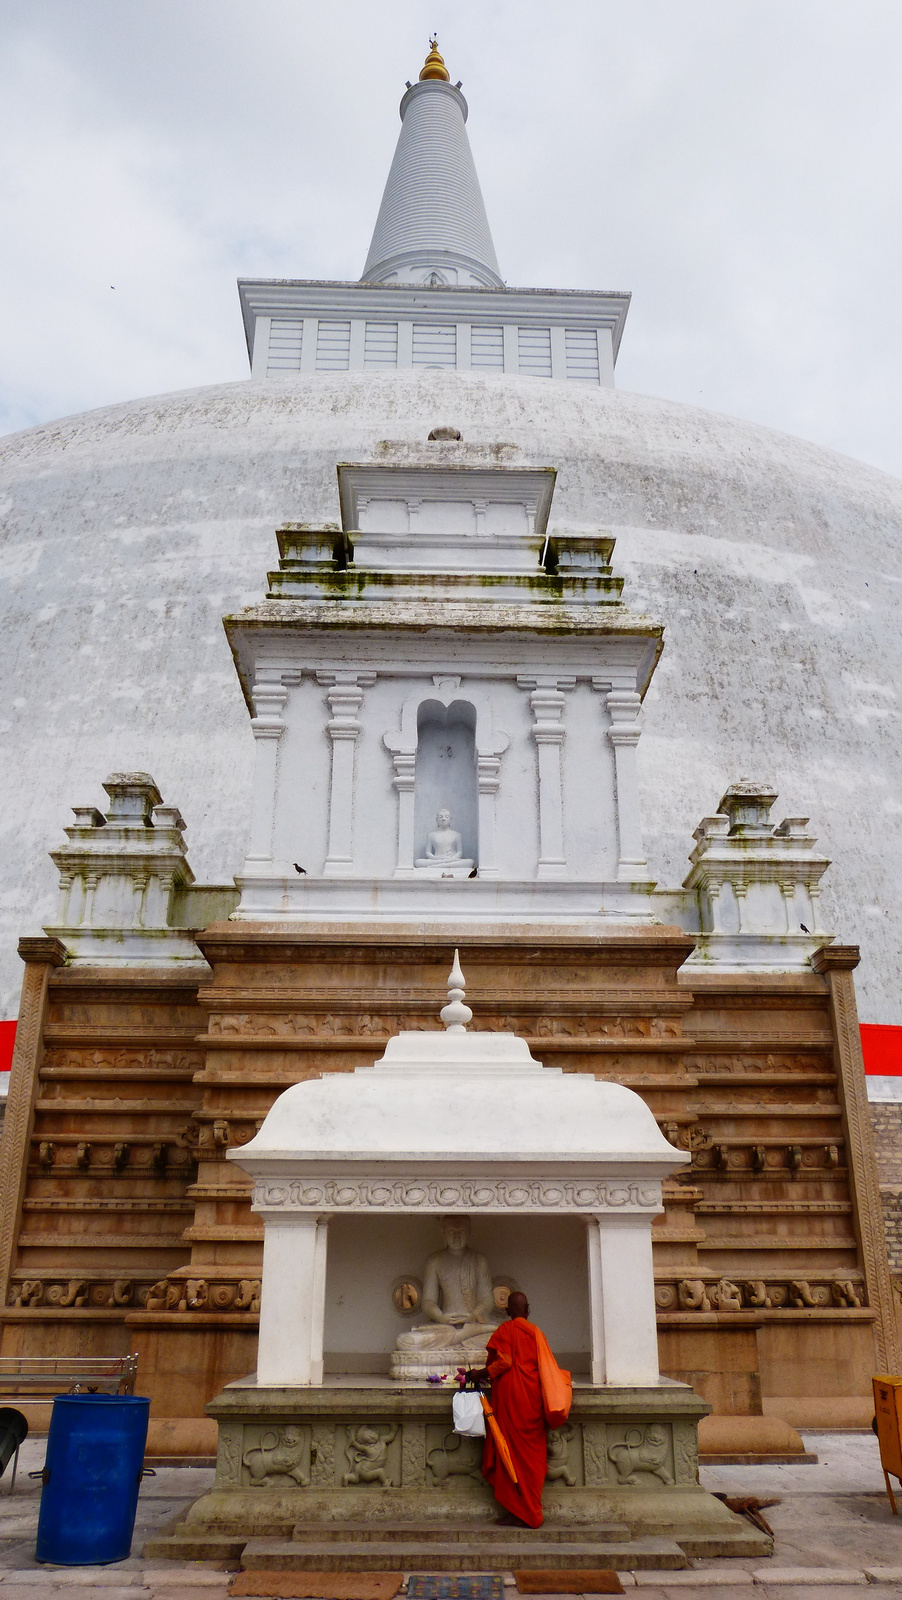 Stupa (Sri Lanka)